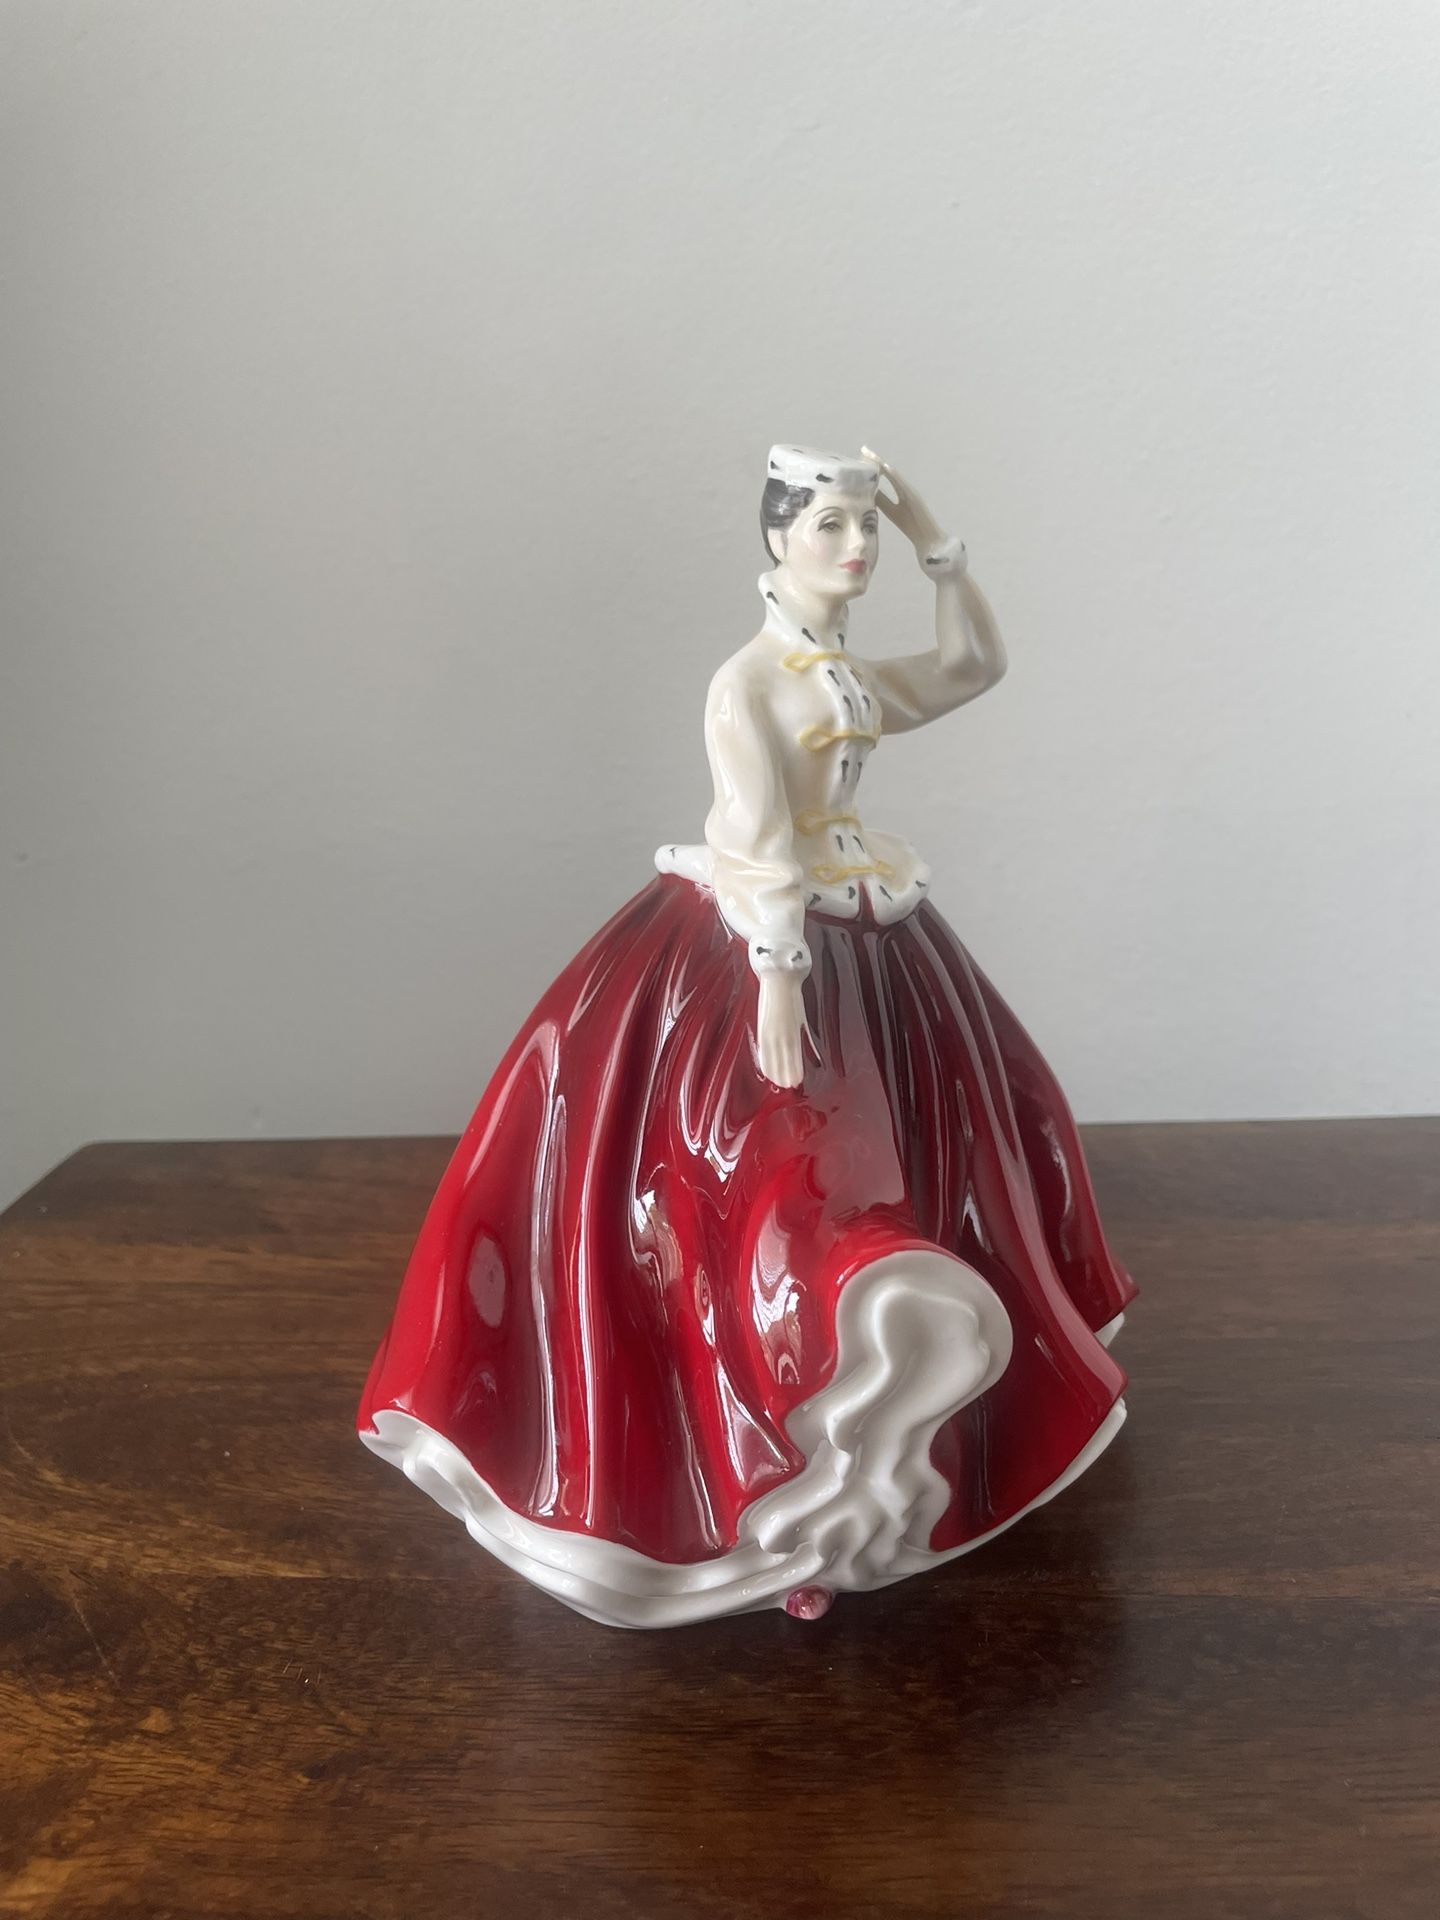 Royal Doulton Porcelain Figurine “Gail” 1985